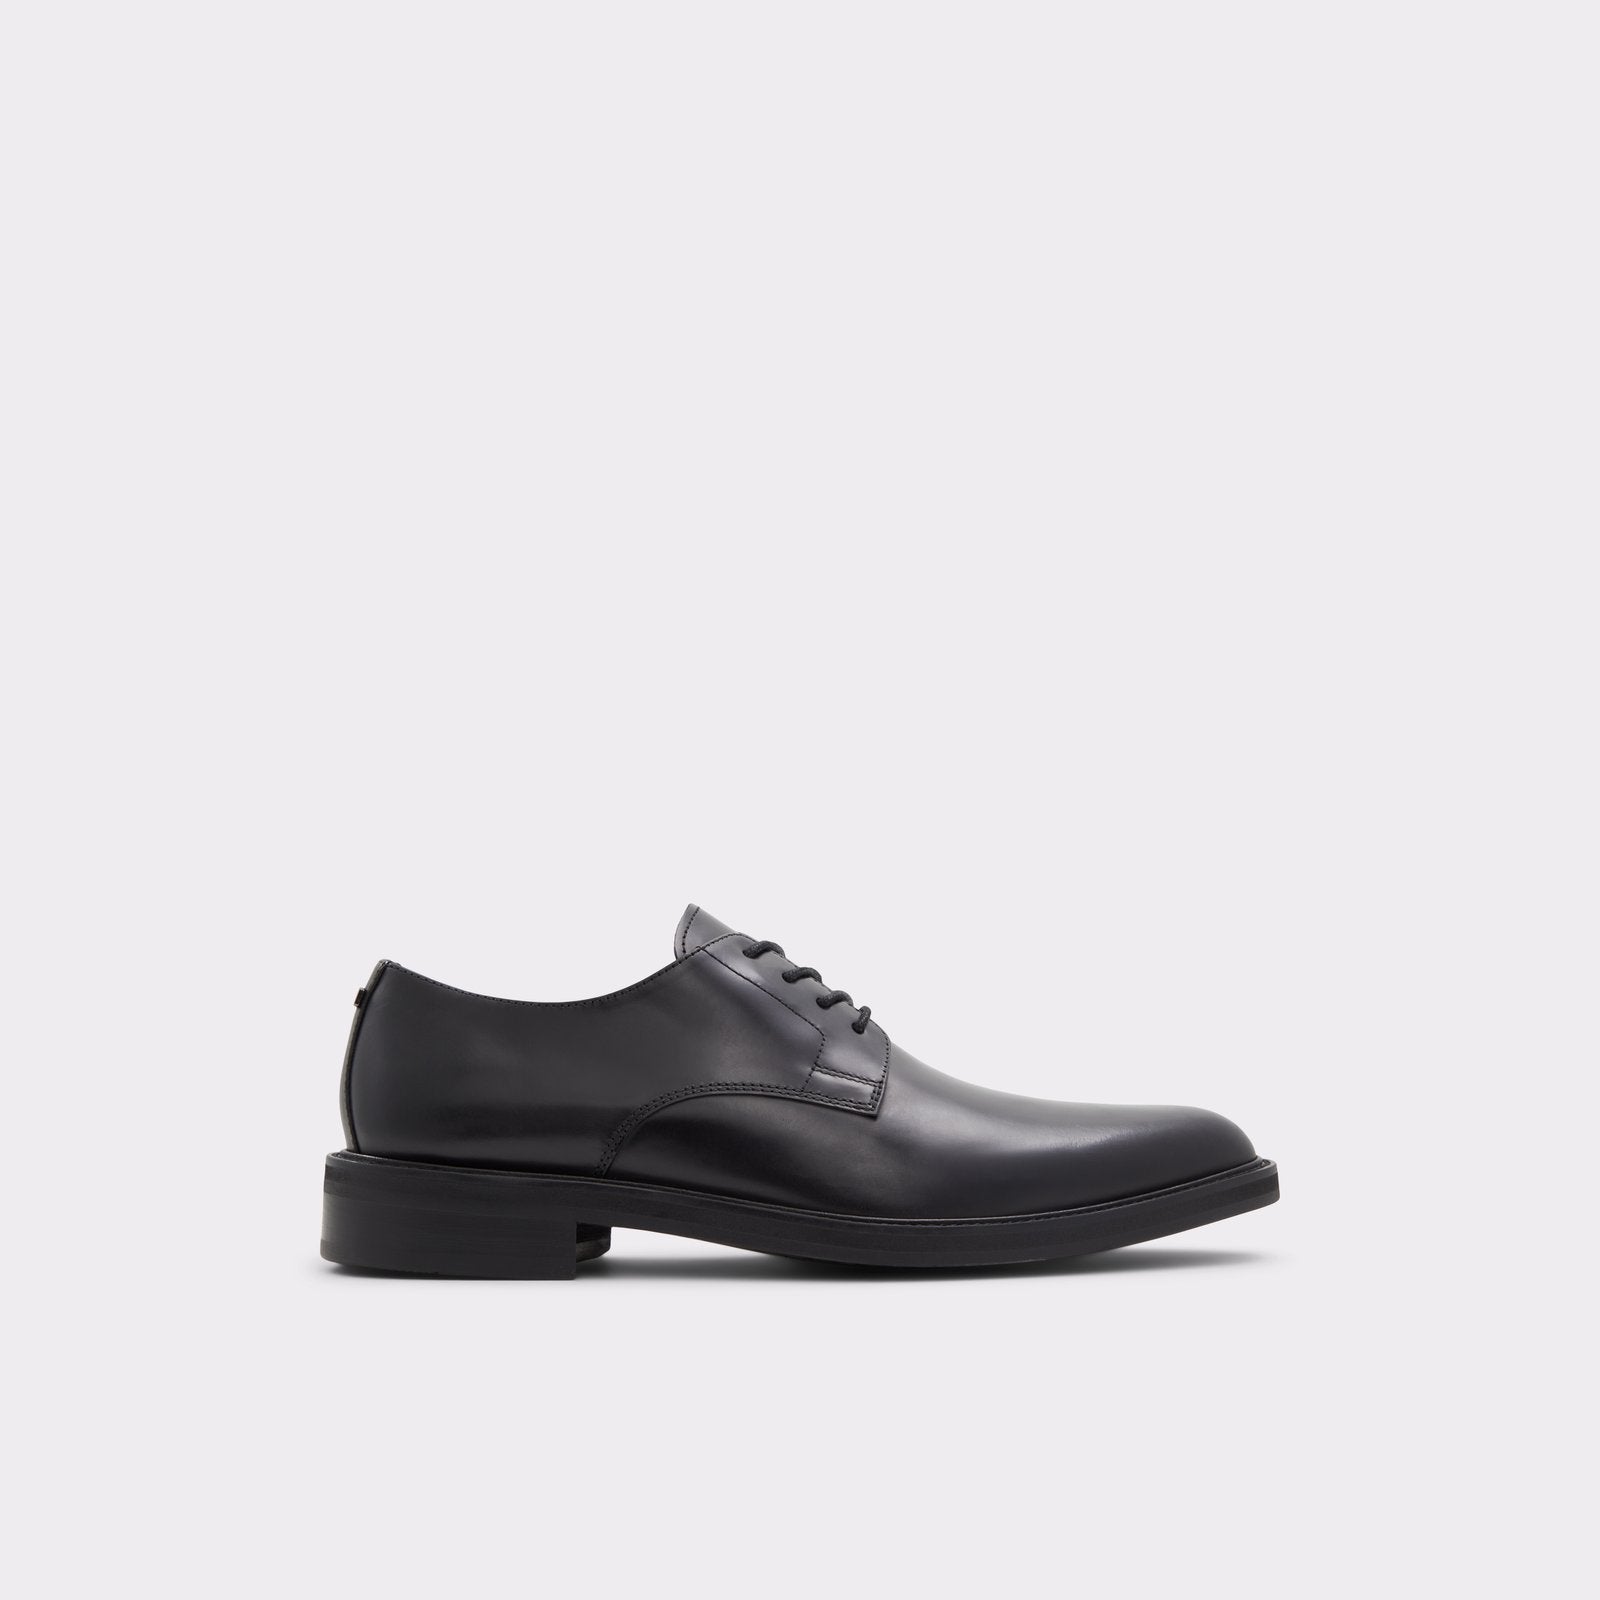 Aldo Men’s Pillow Walk Comfortable Oxford Shoes Libertine (Black)